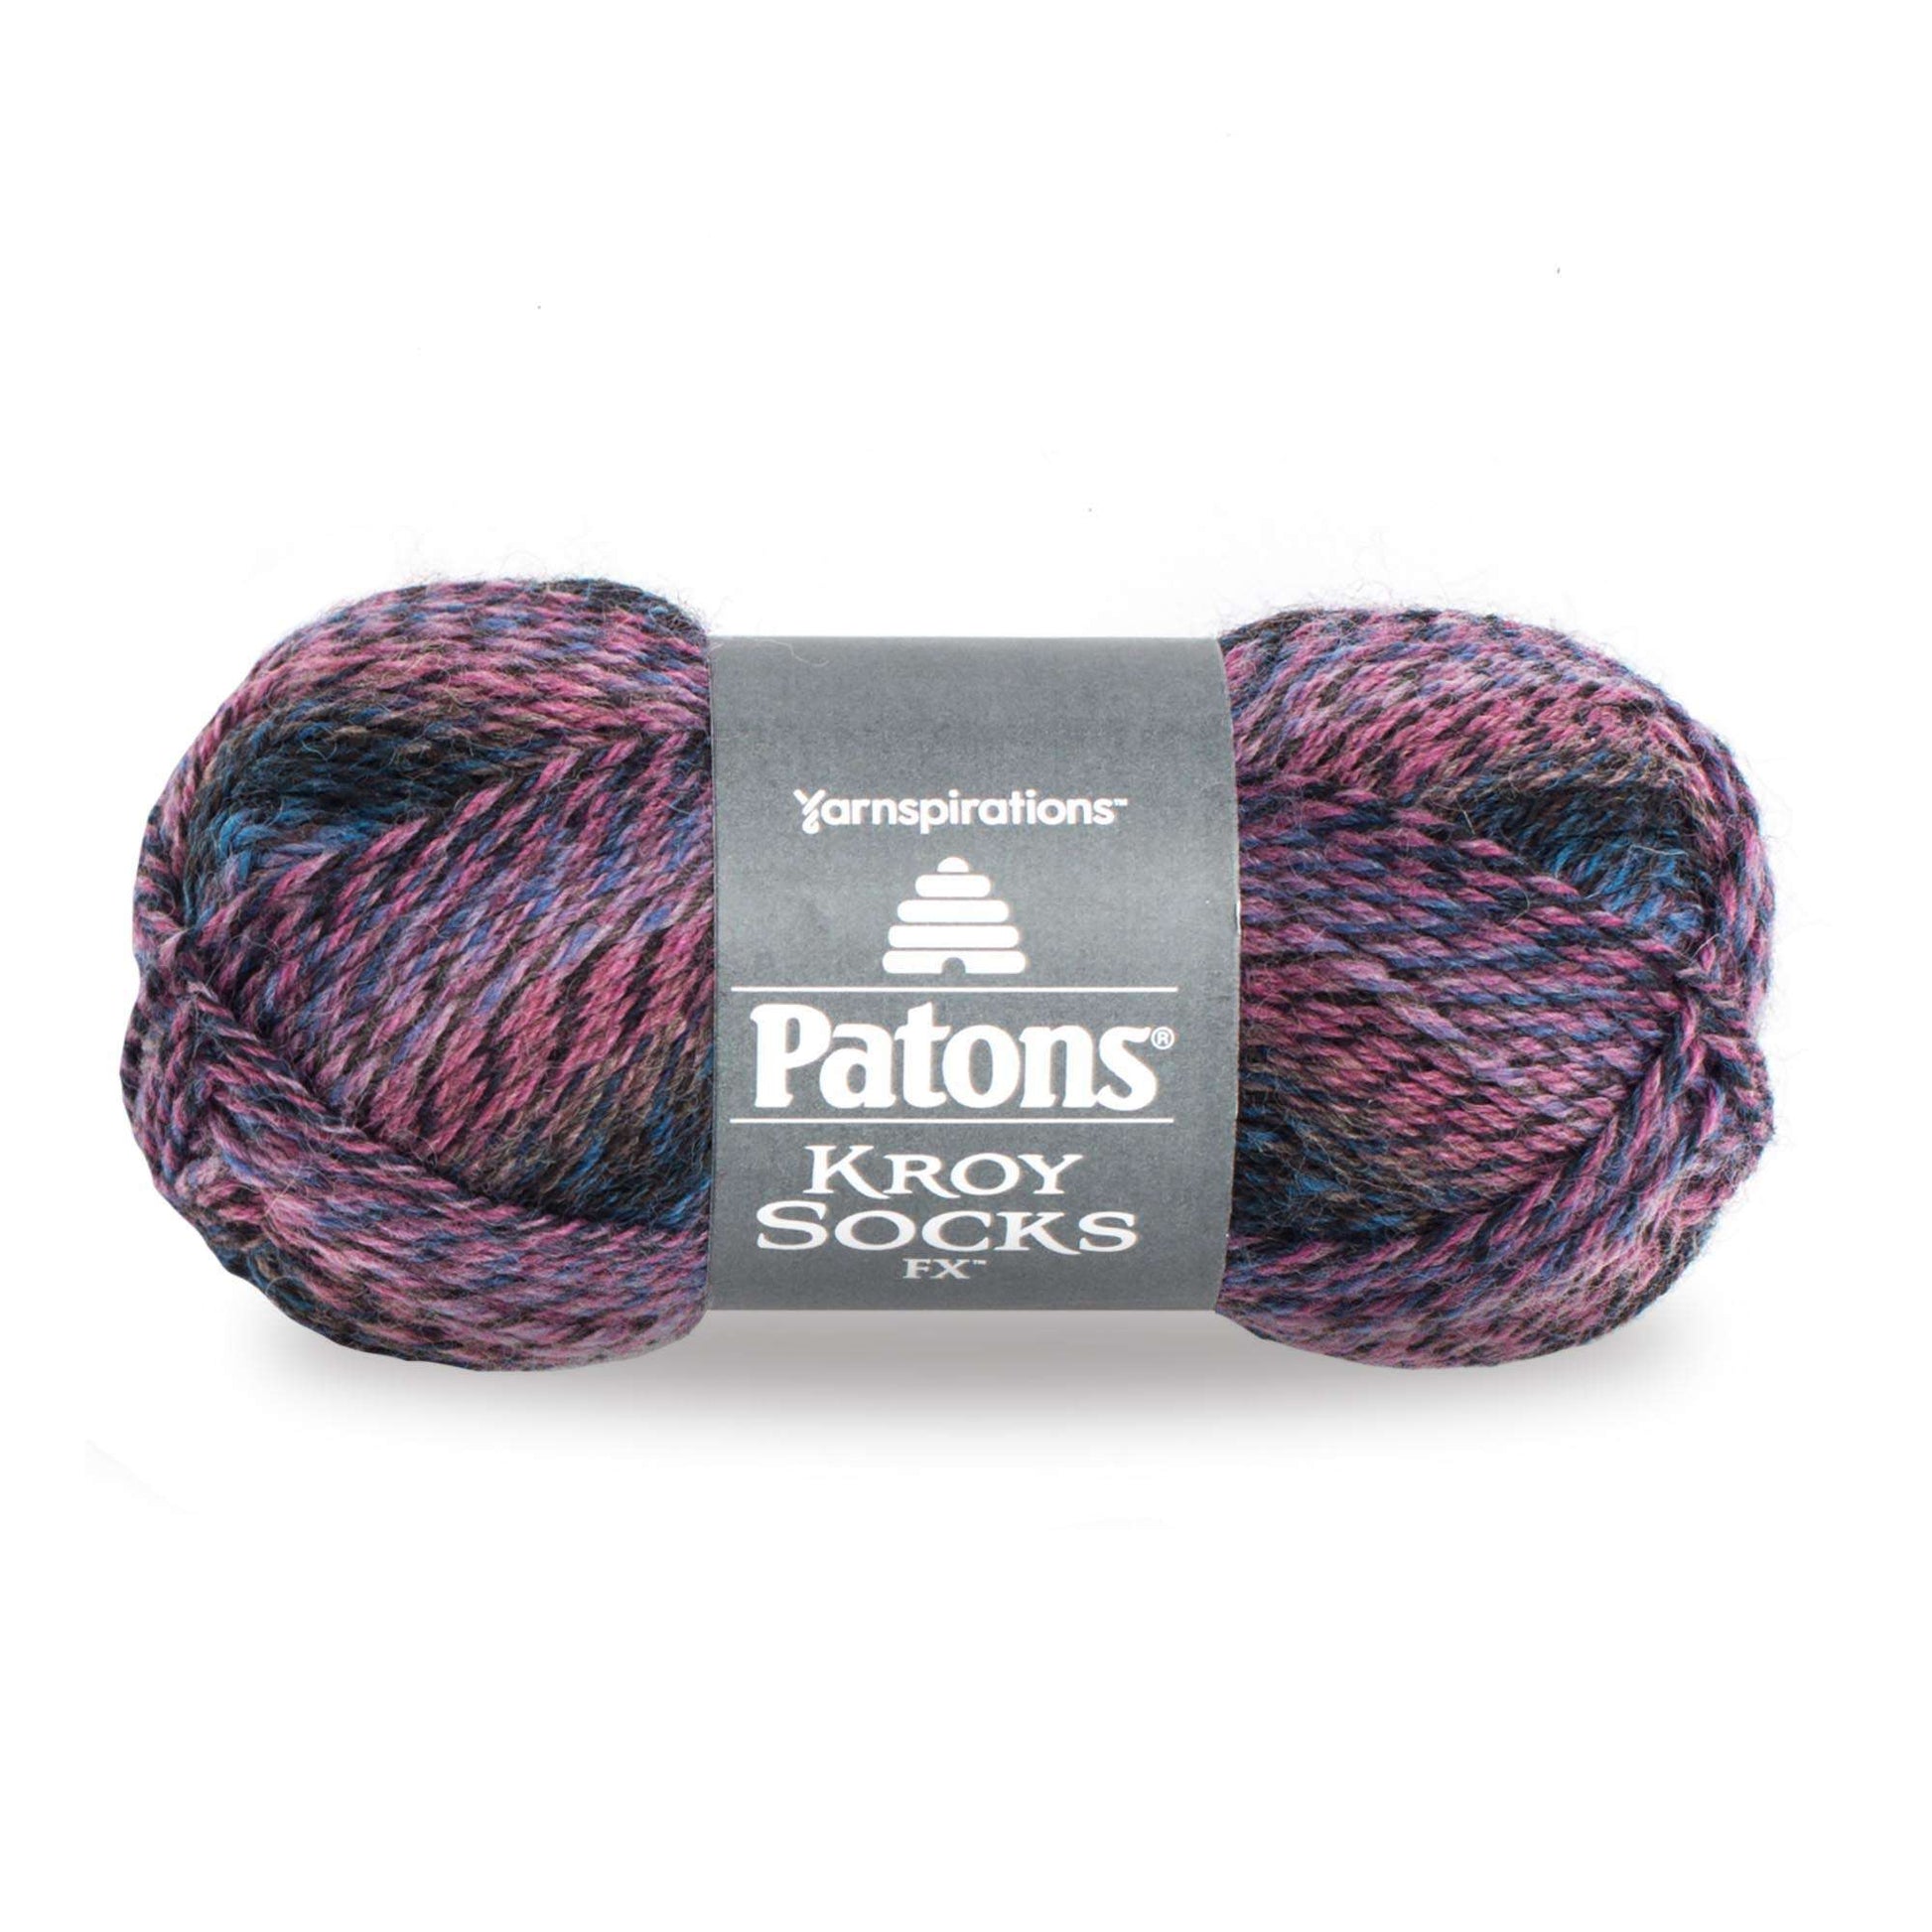 Patons Kroy Socks FX Yarn | Yarnspirations